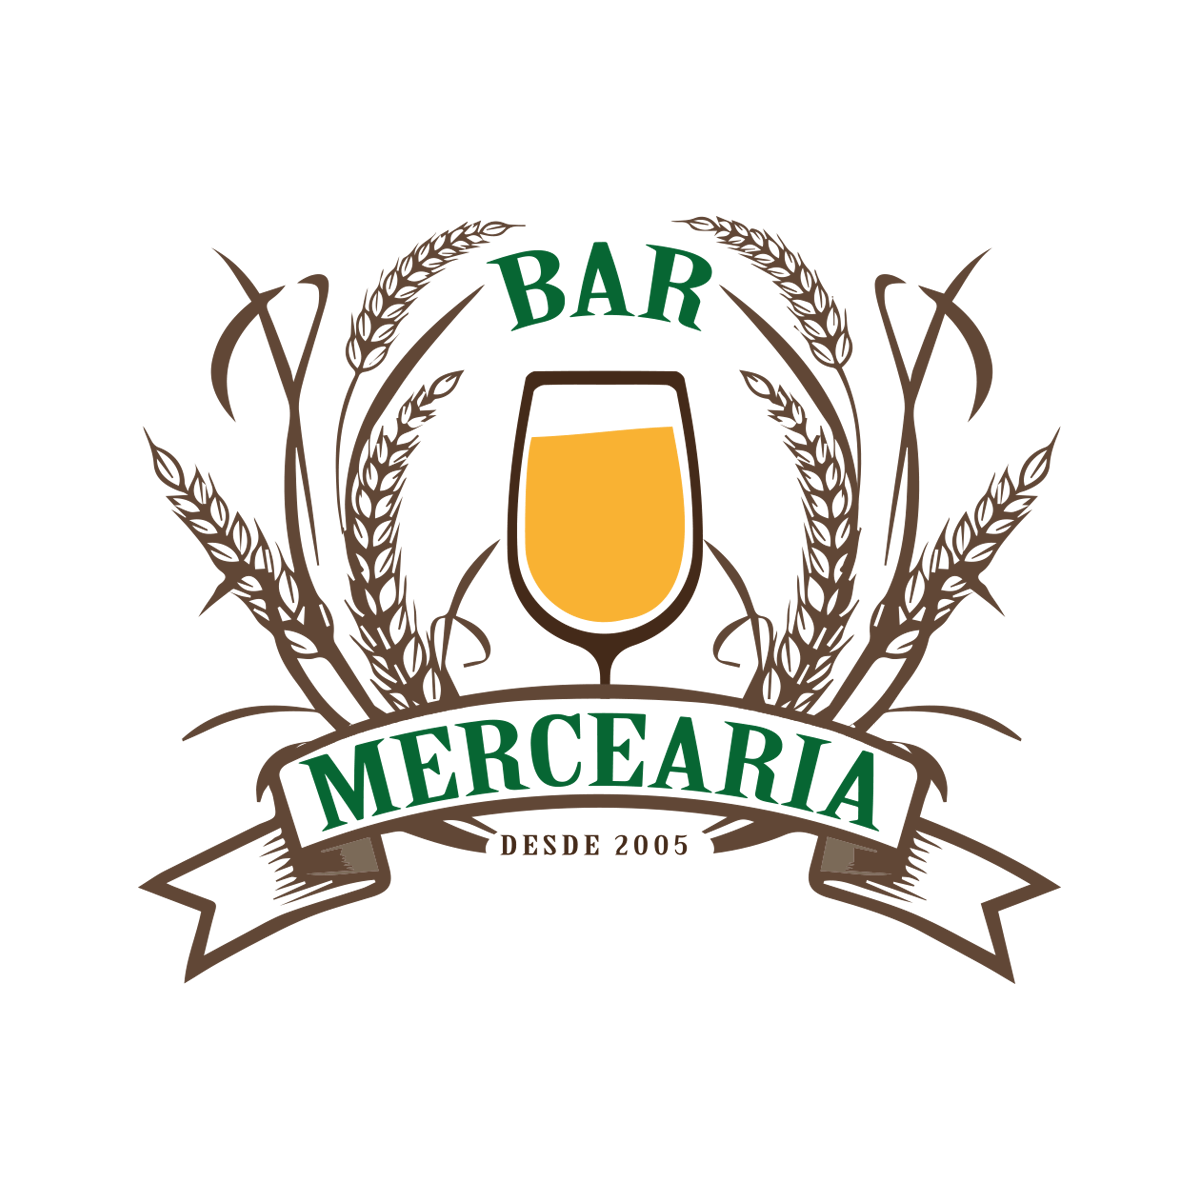 Mercearia bar